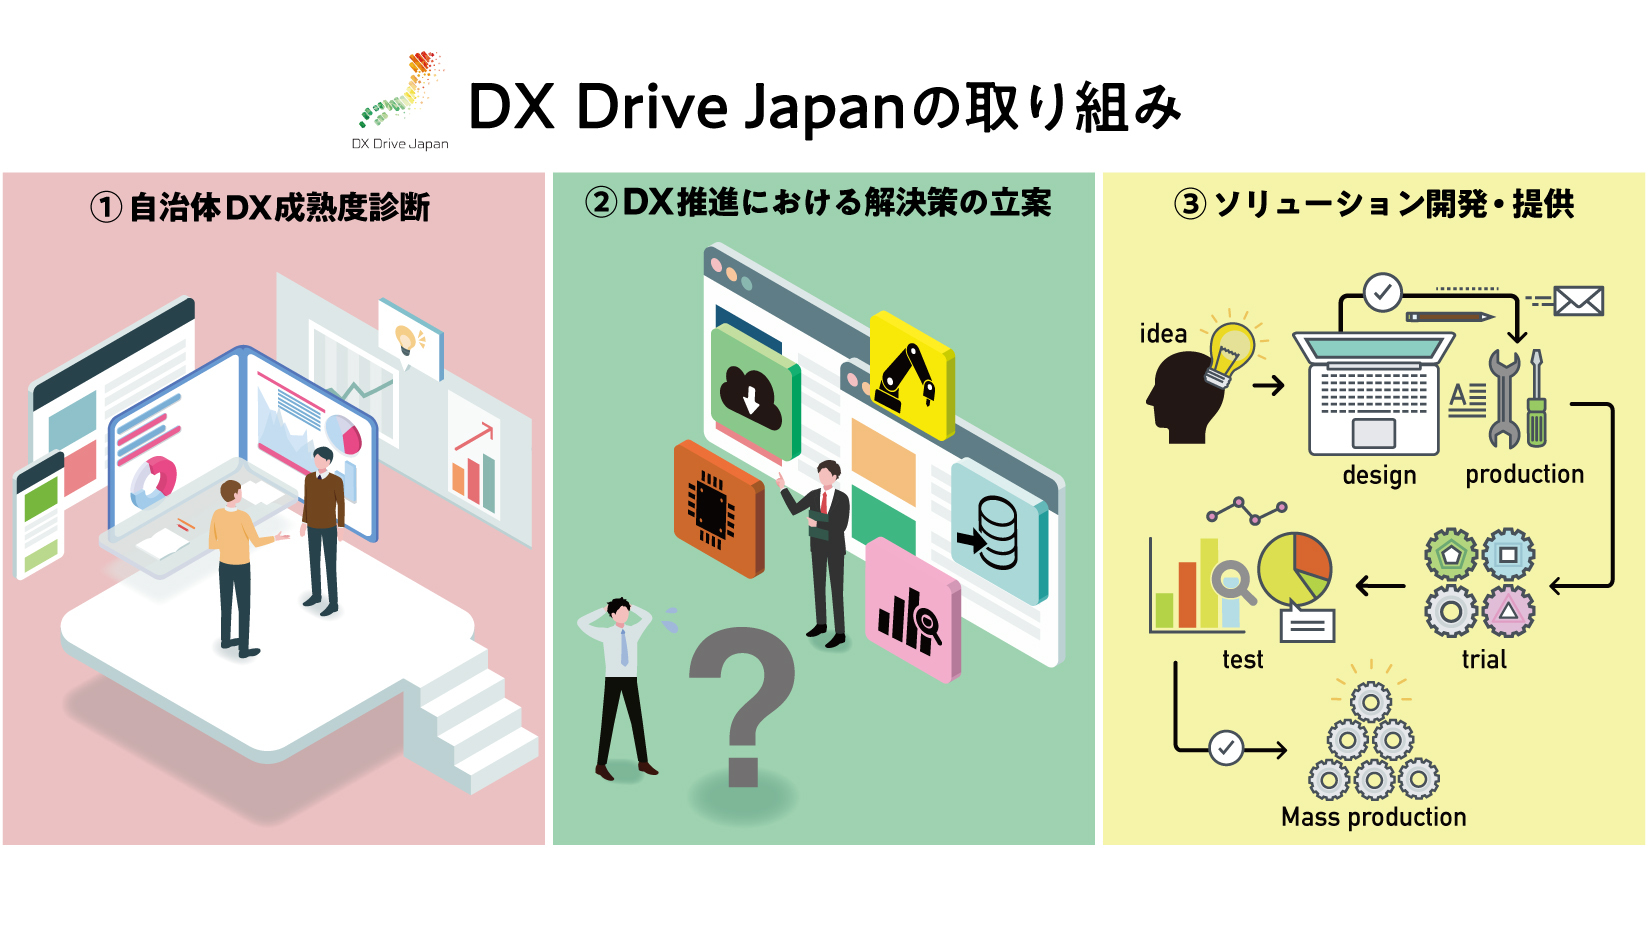 DX Drive Japan